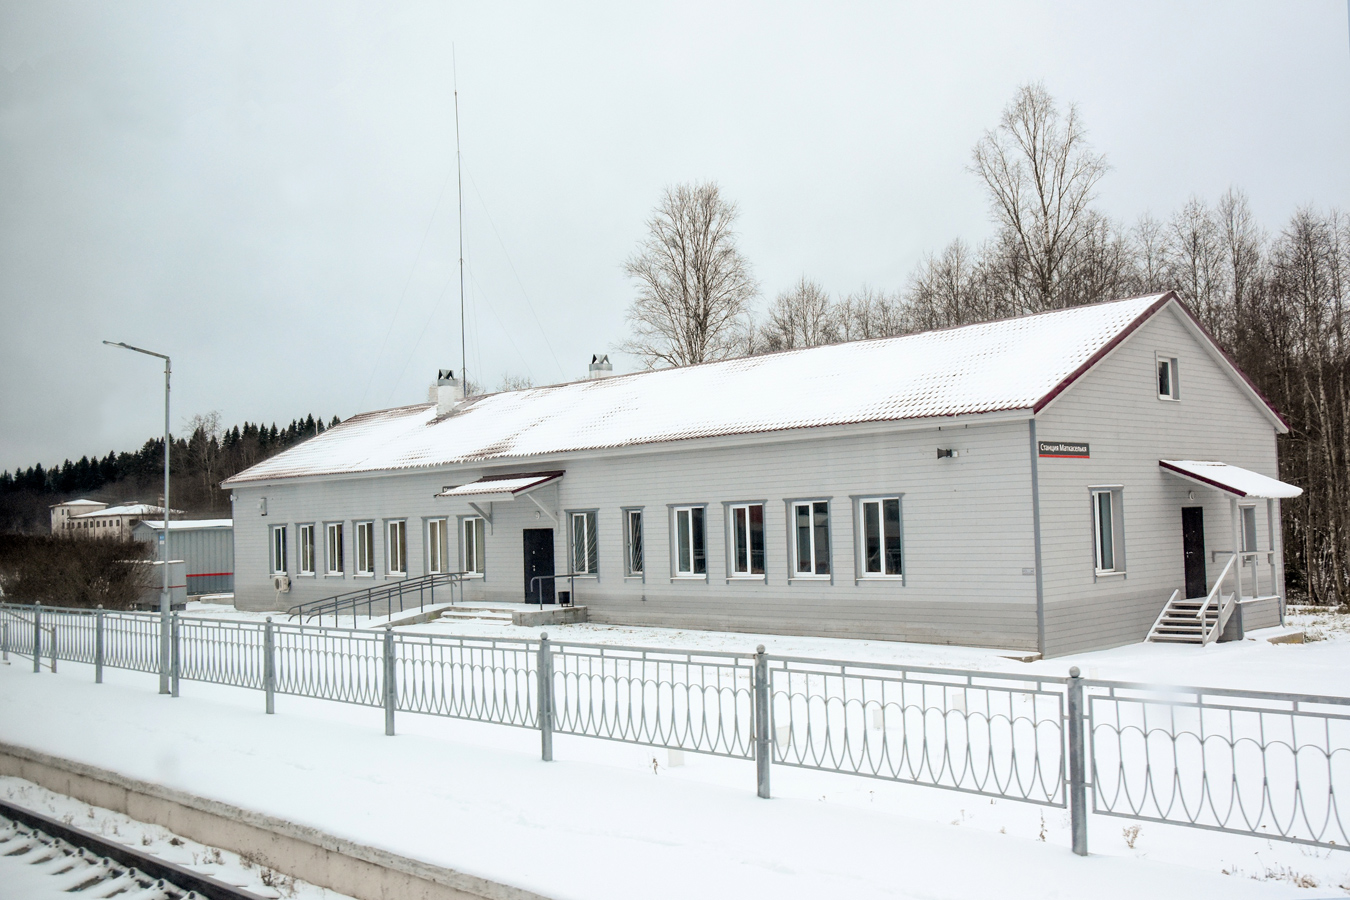 November 3, 2019. Matkaselkä railway station